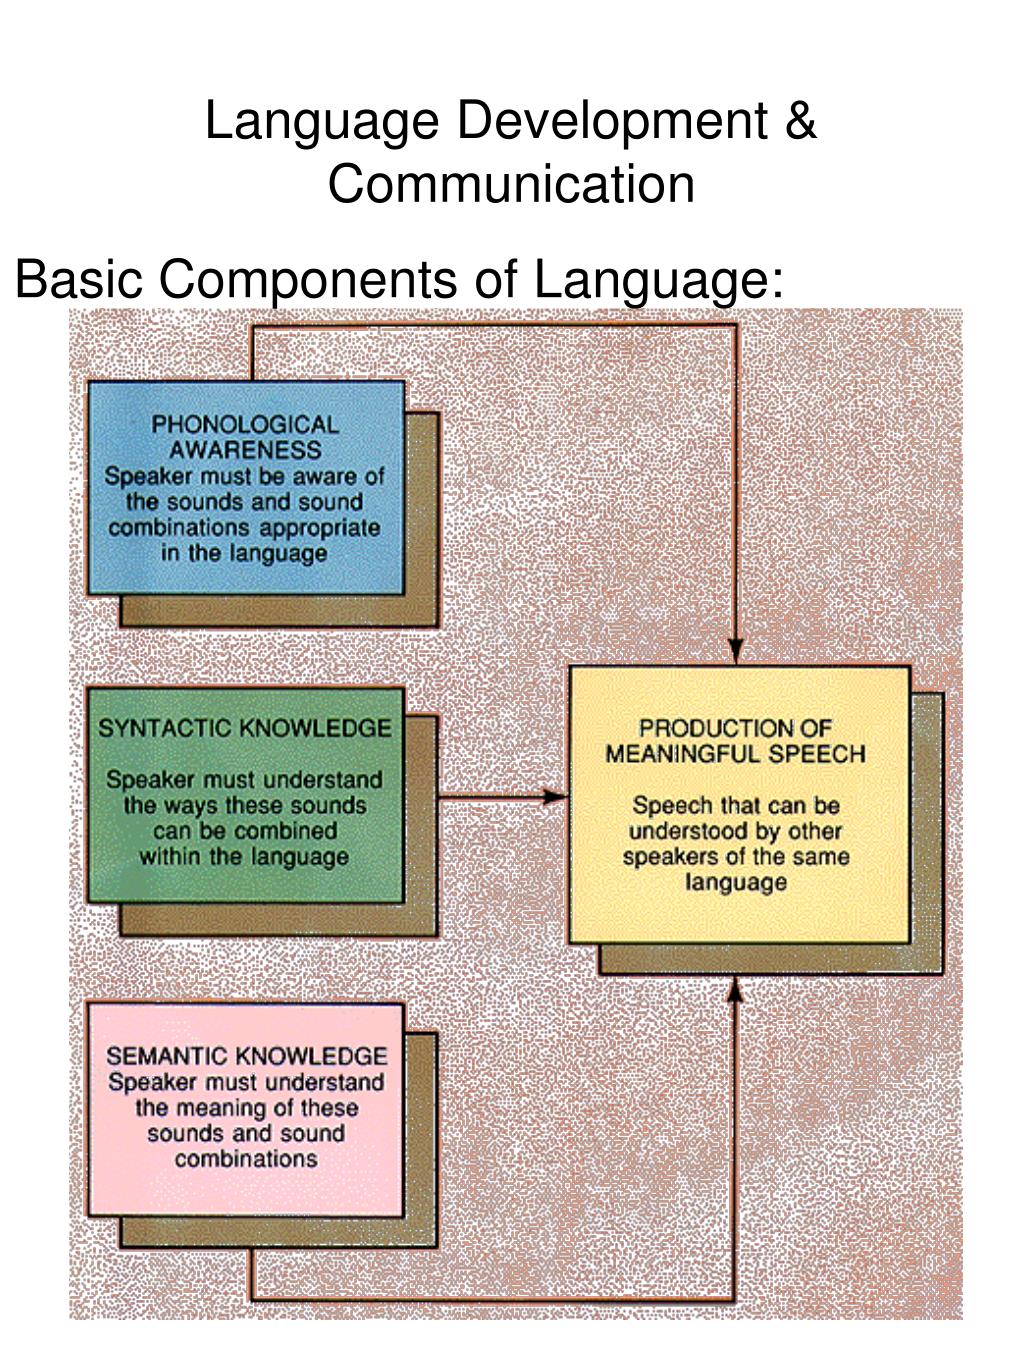 components of language